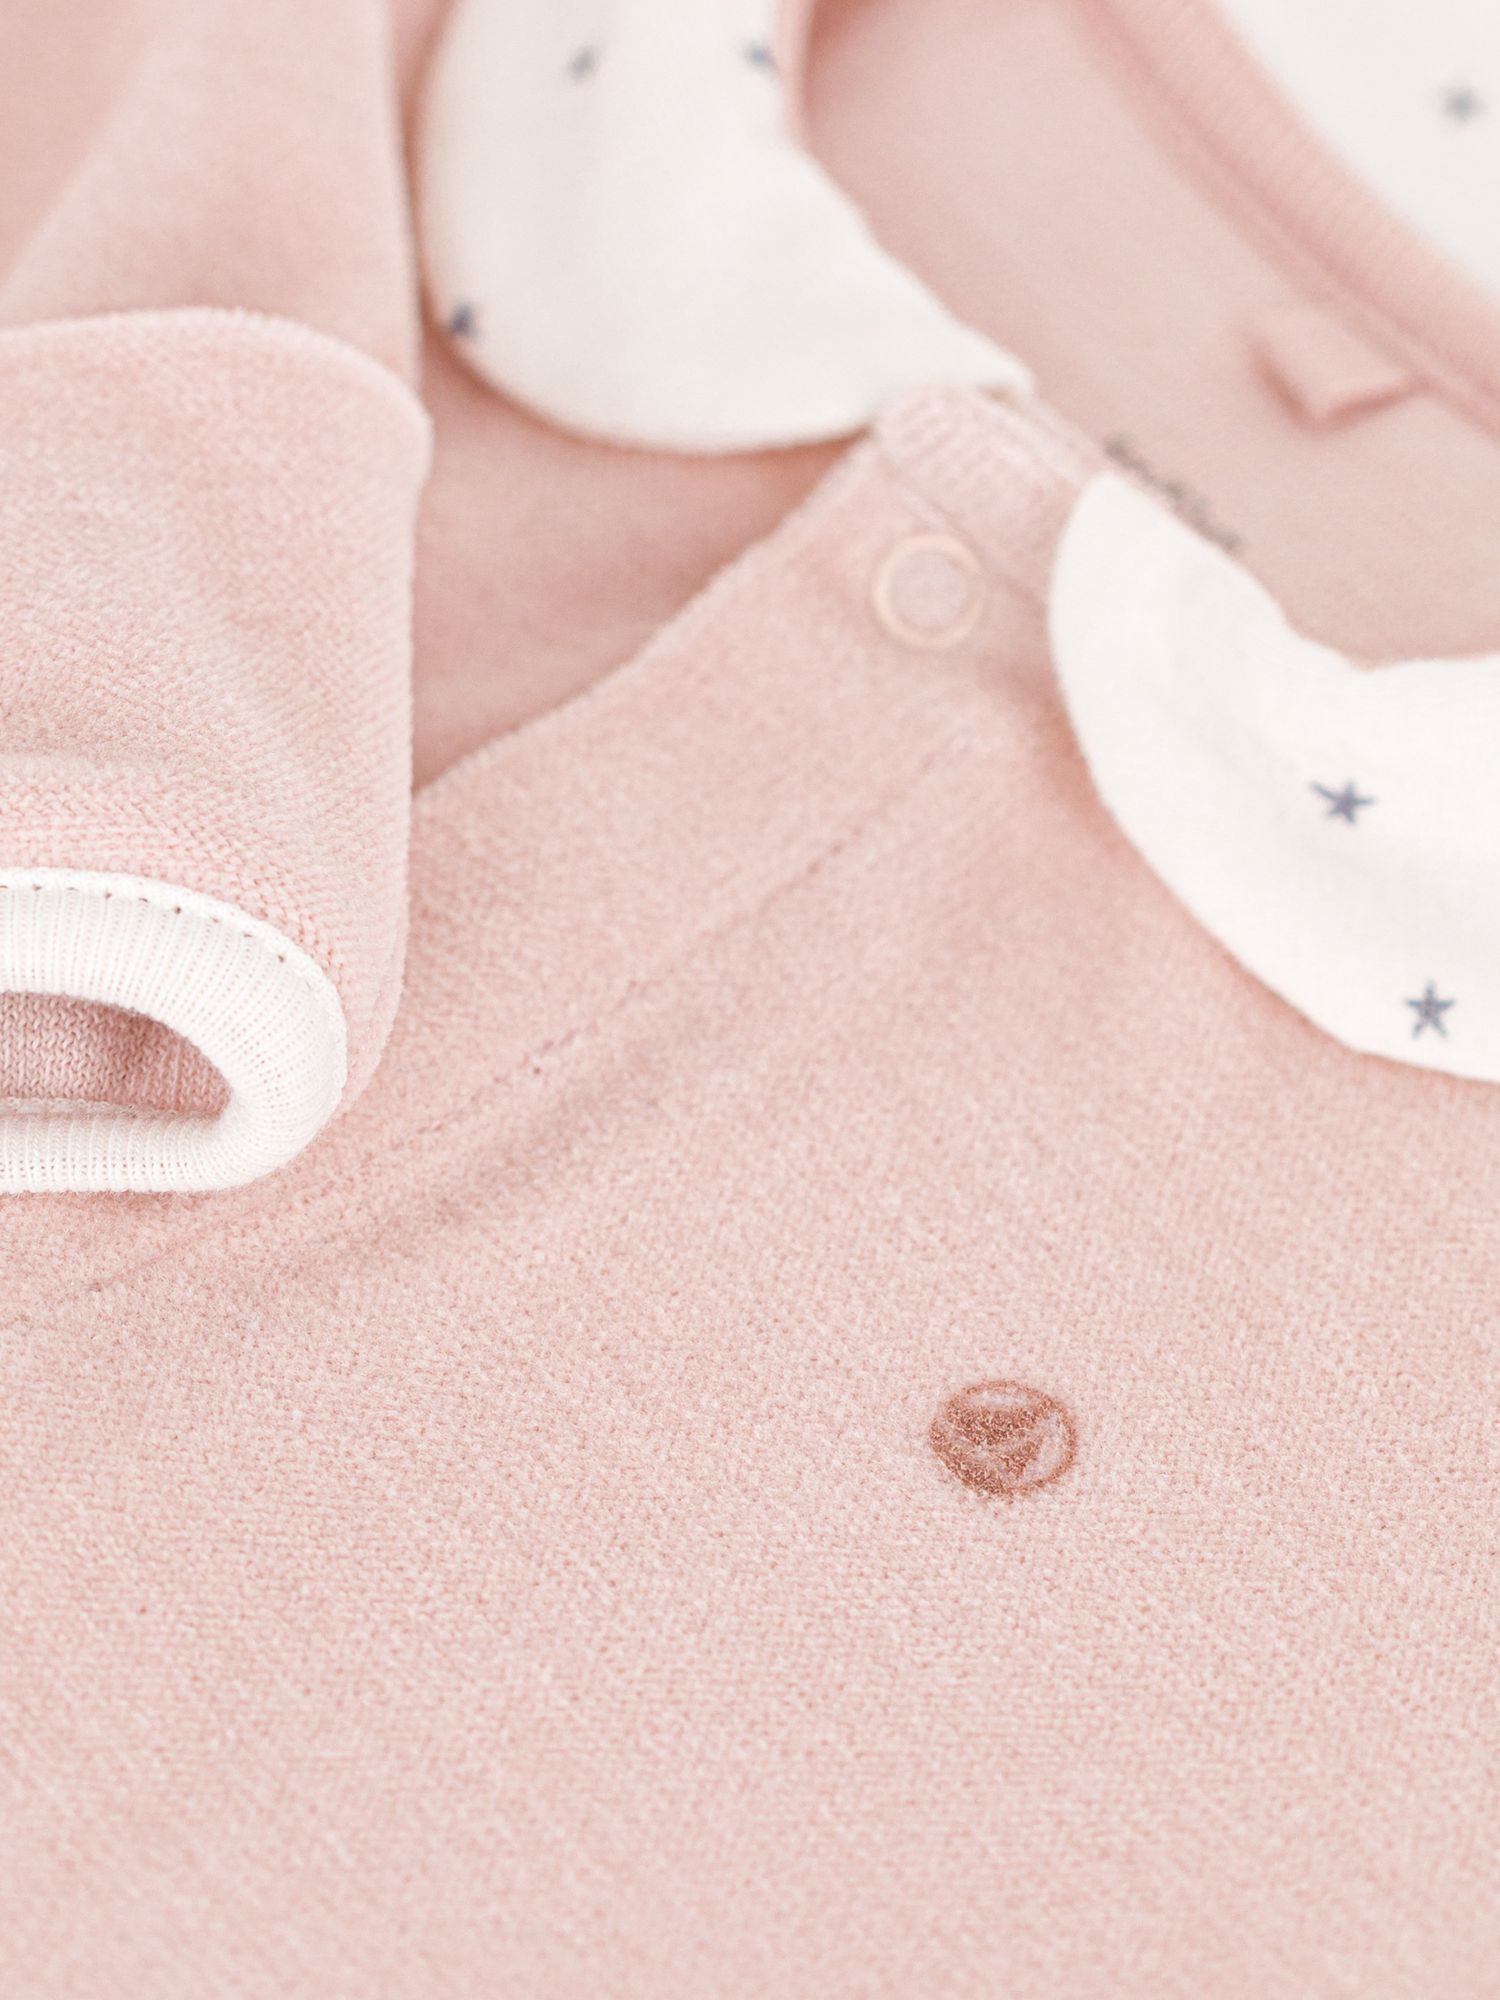 Buy Petit Bateau Baby Star Print Collar Sleepsuit, Saline Online at johnlewis.com